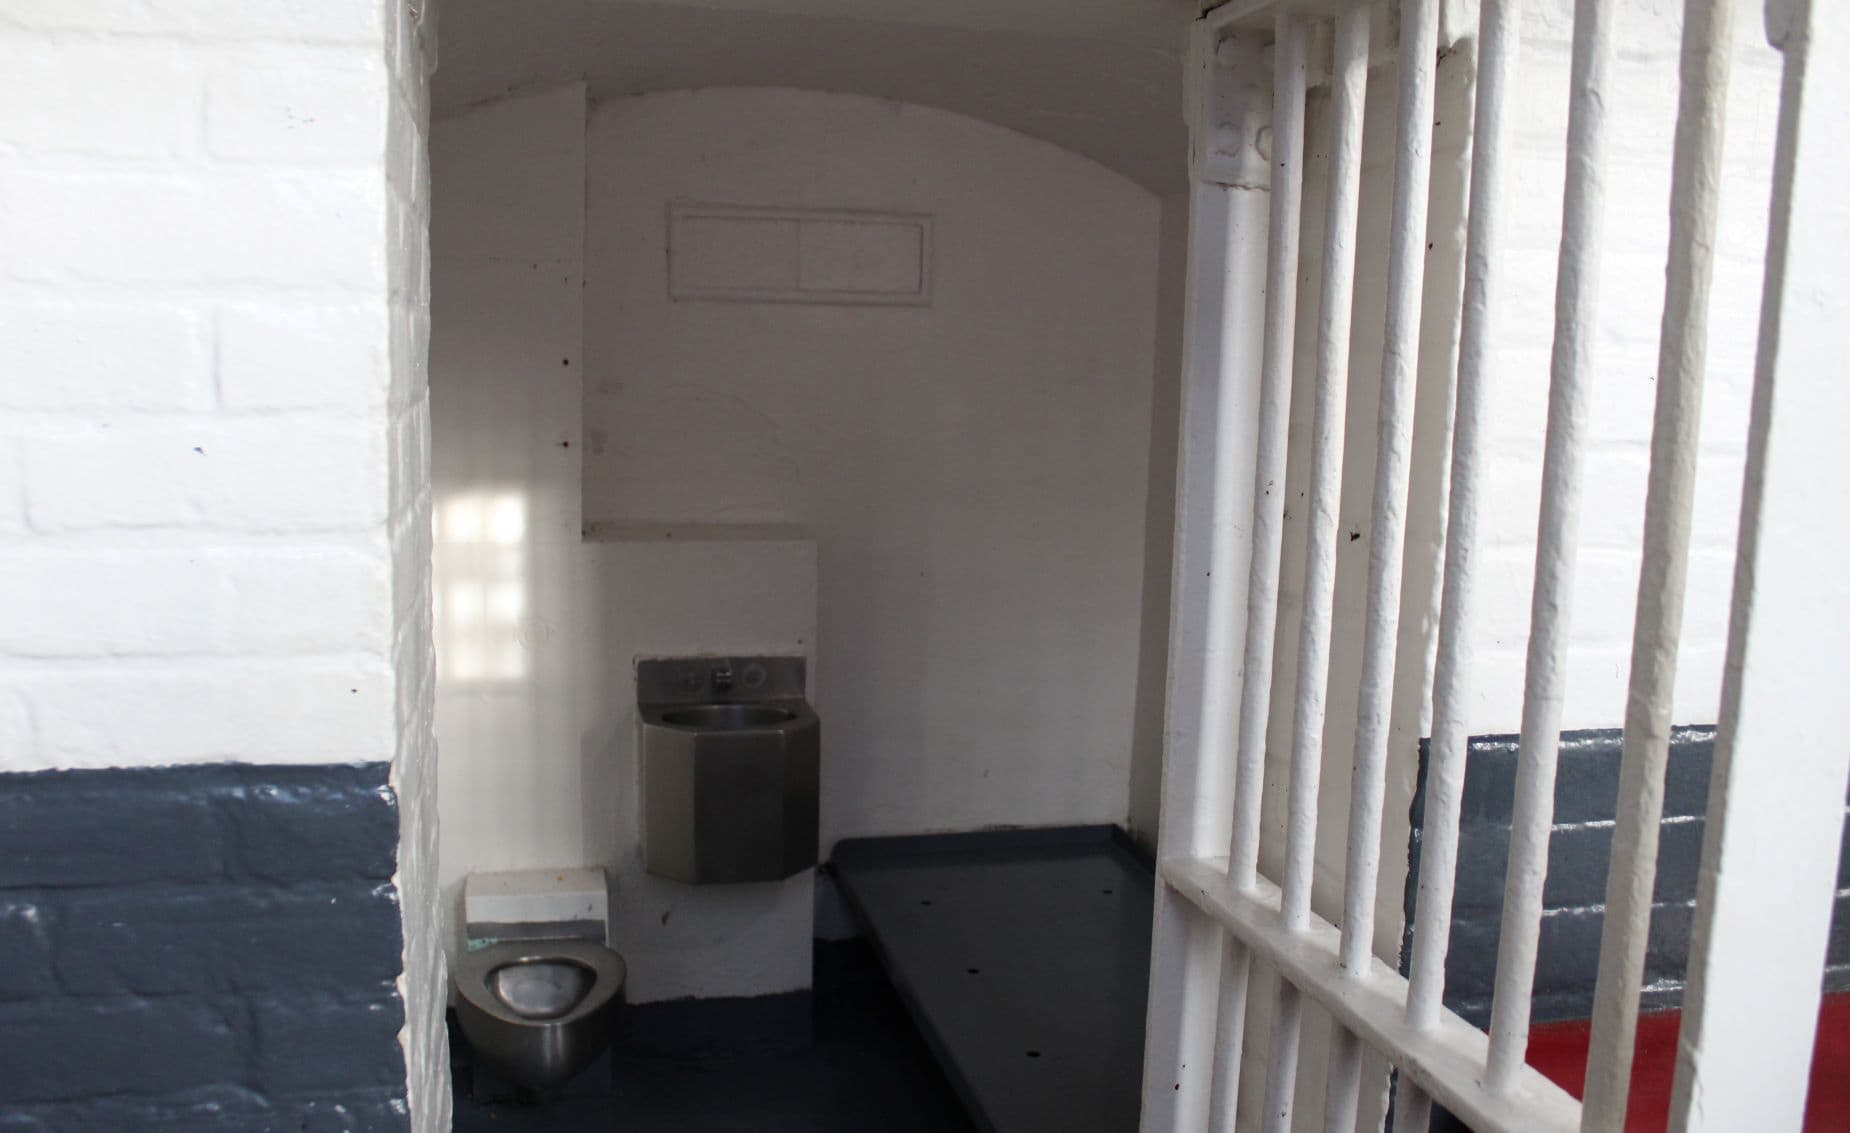 A cell in the Ash Street Jail. (Ben Berke/The Public's Radio)